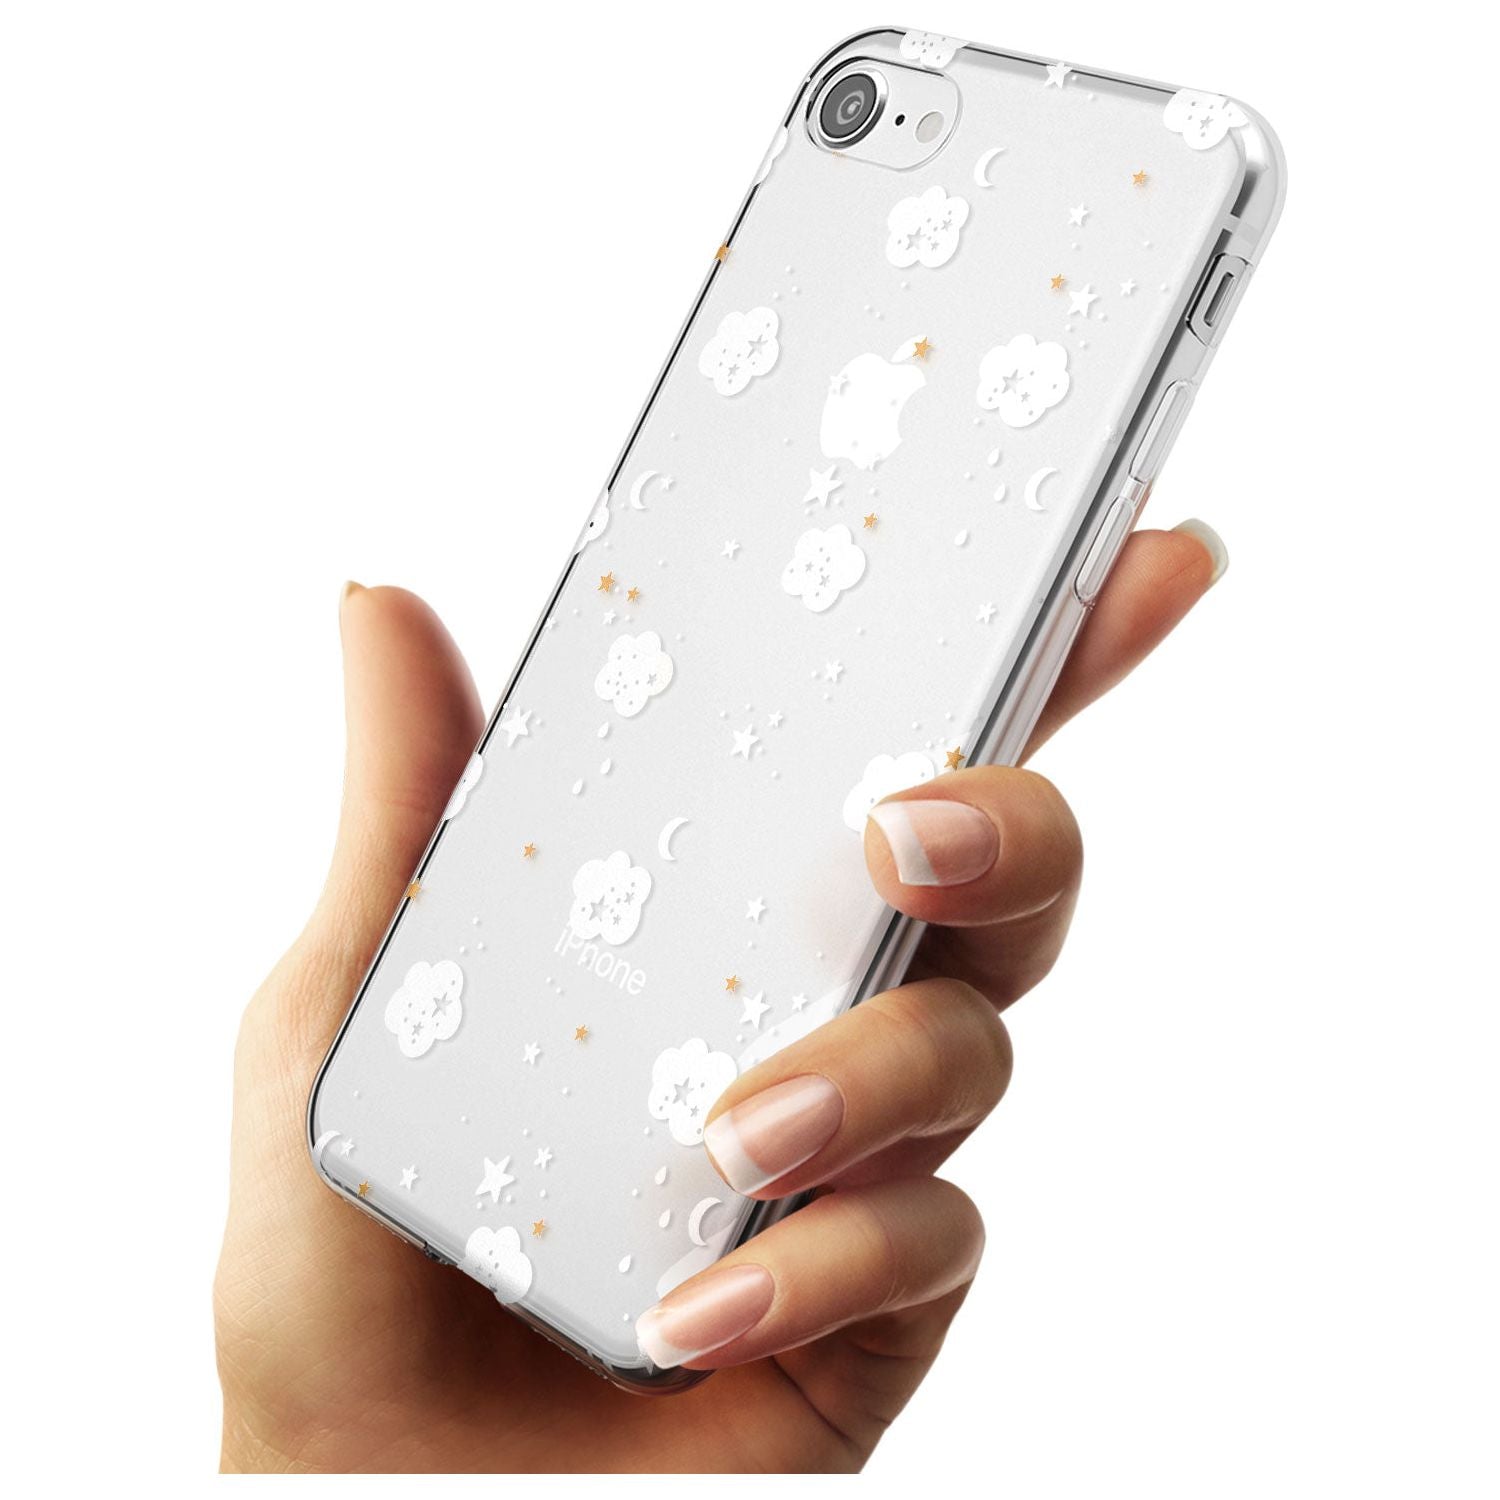 Stars & Clouds Black Impact Phone Case for iPhone SE 8 7 Plus